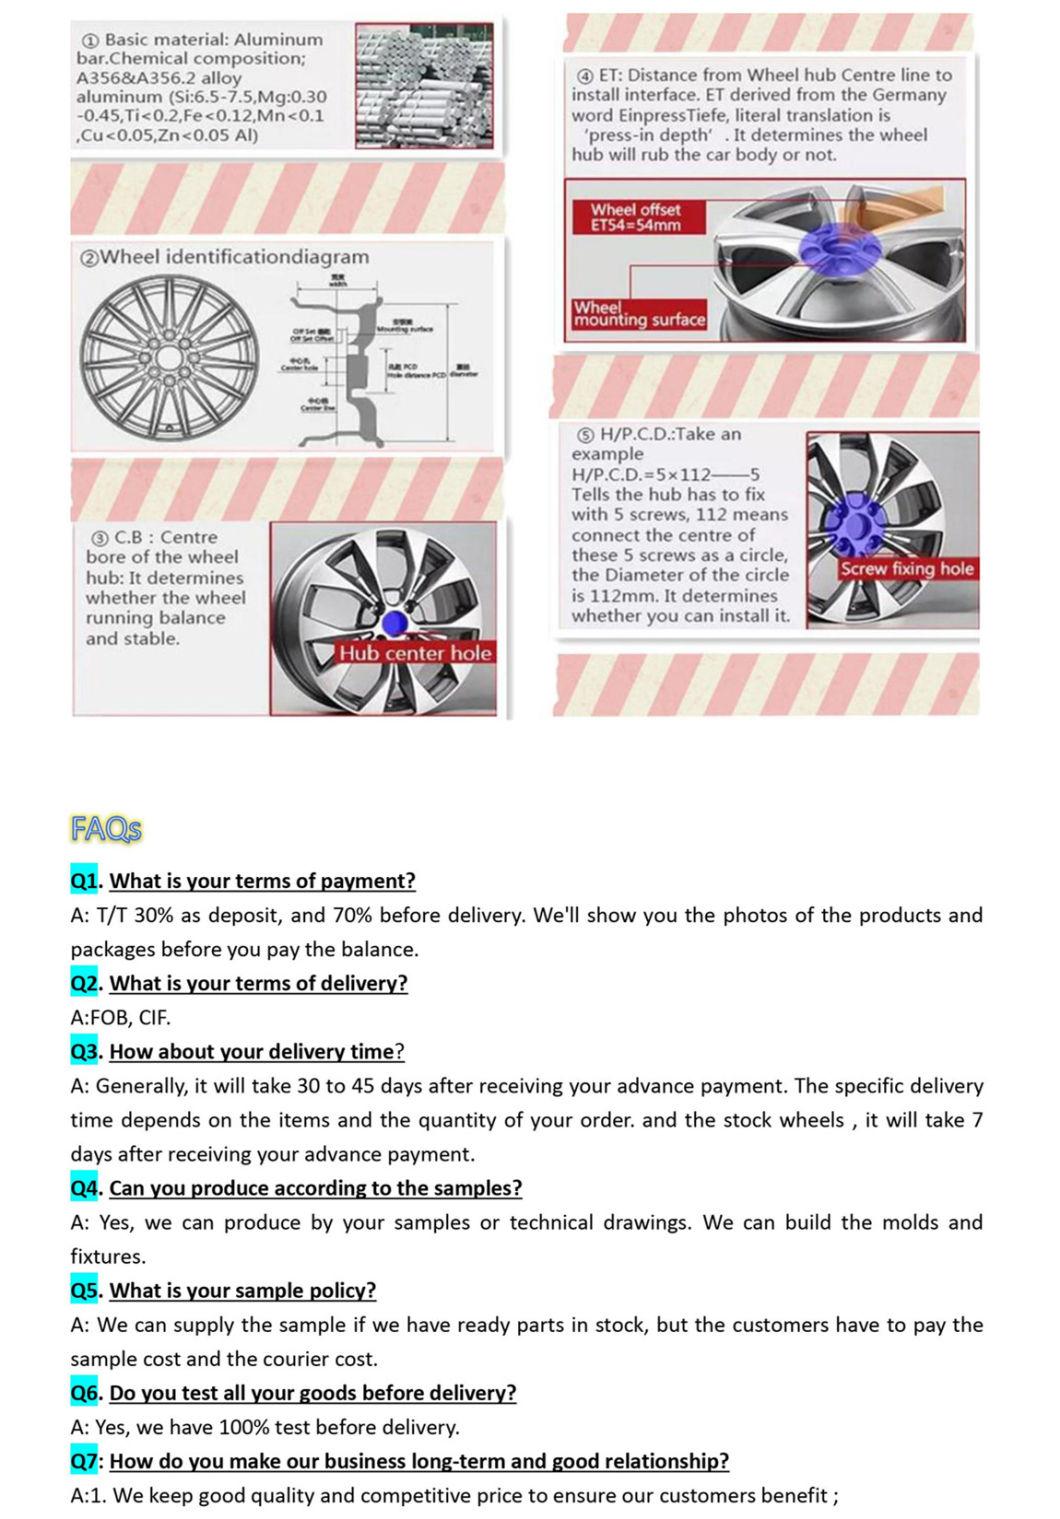 Replica Wheels Passenger Car Alloy Wheel Rims Full Size Available for Datsun